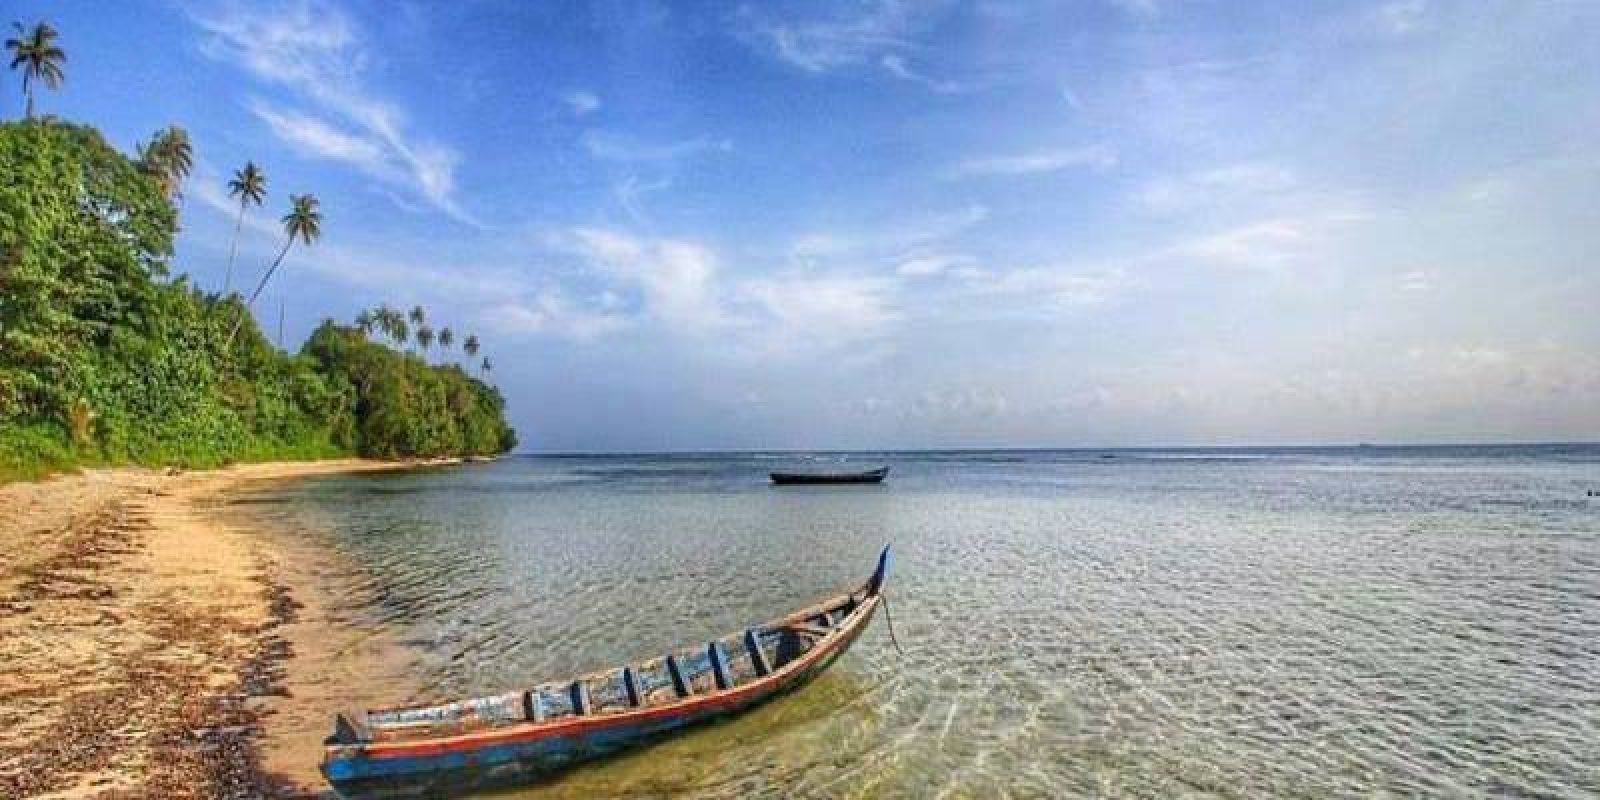 10 Wisata Maritim Di Pulau Enggano Yang Paling Hits